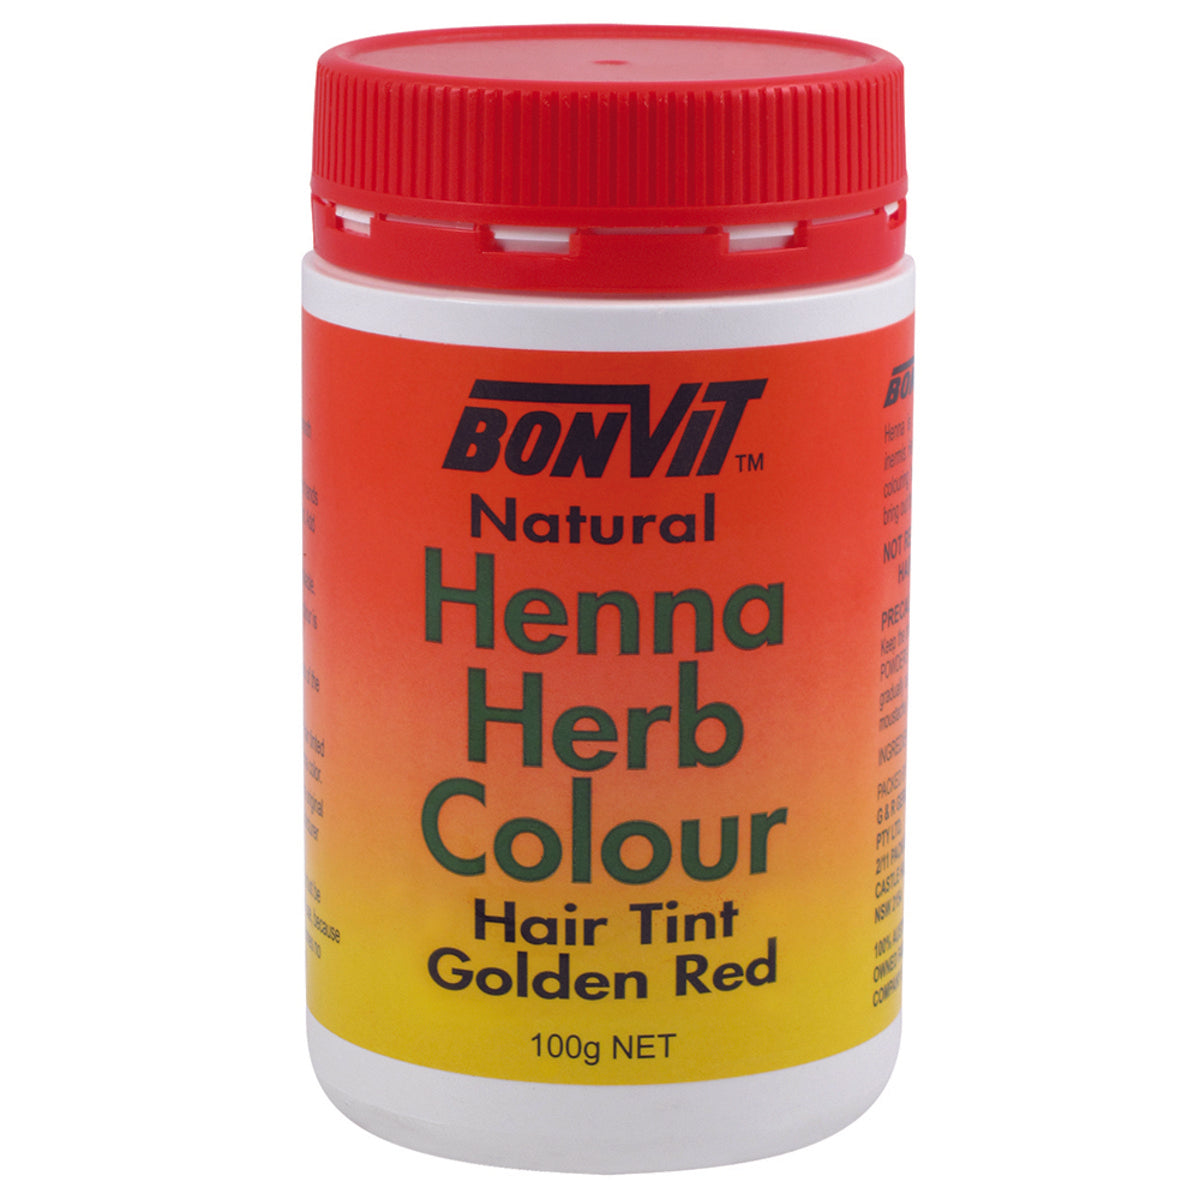 Bonvit - Henna Herb Colour Hair Tint Golden Red